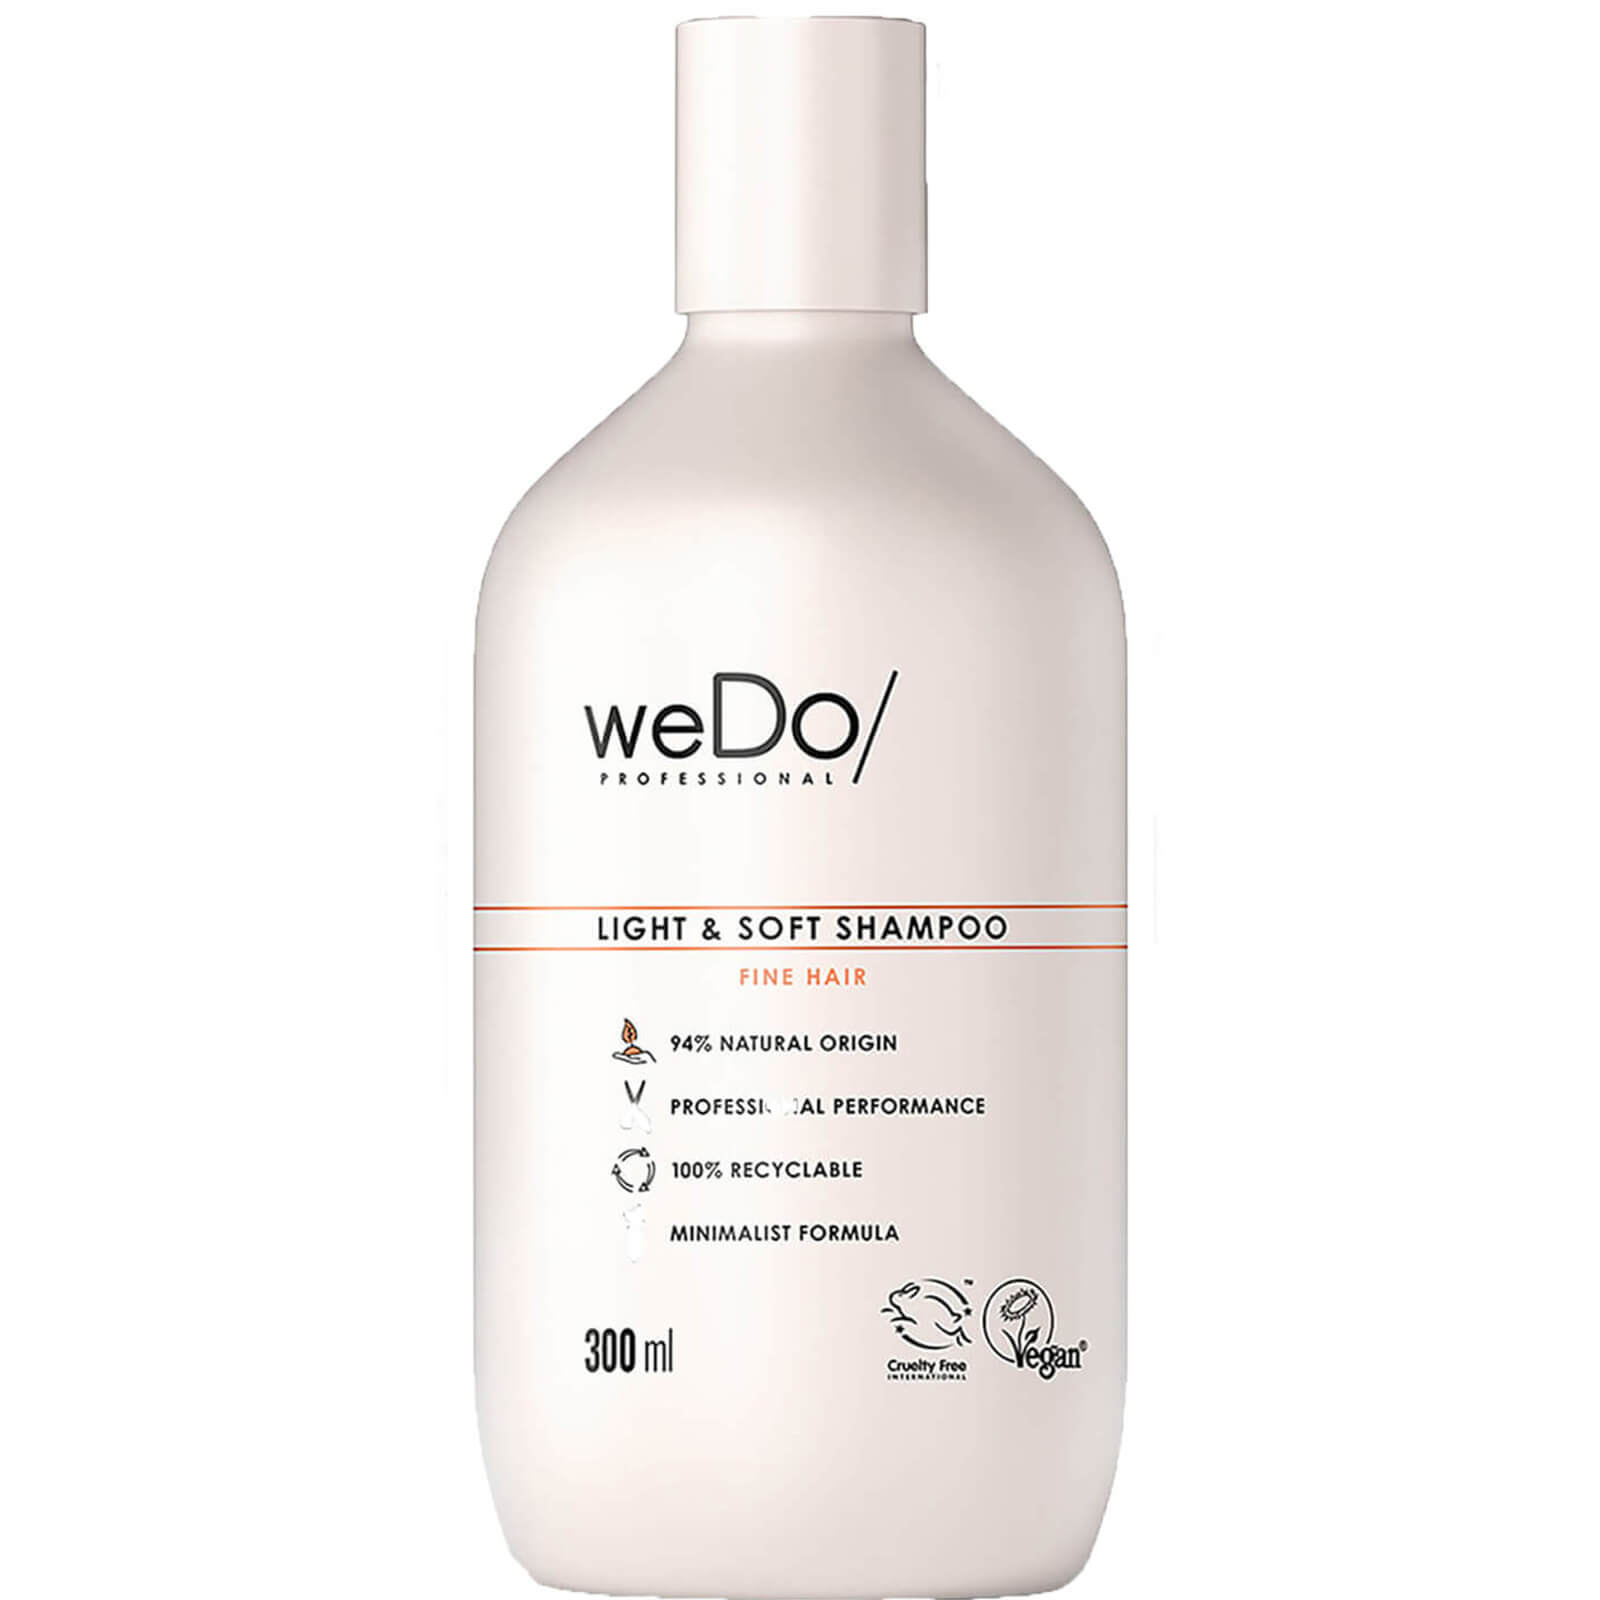 Image of weDo/ Professional Light and Soft Shampoo 300ml